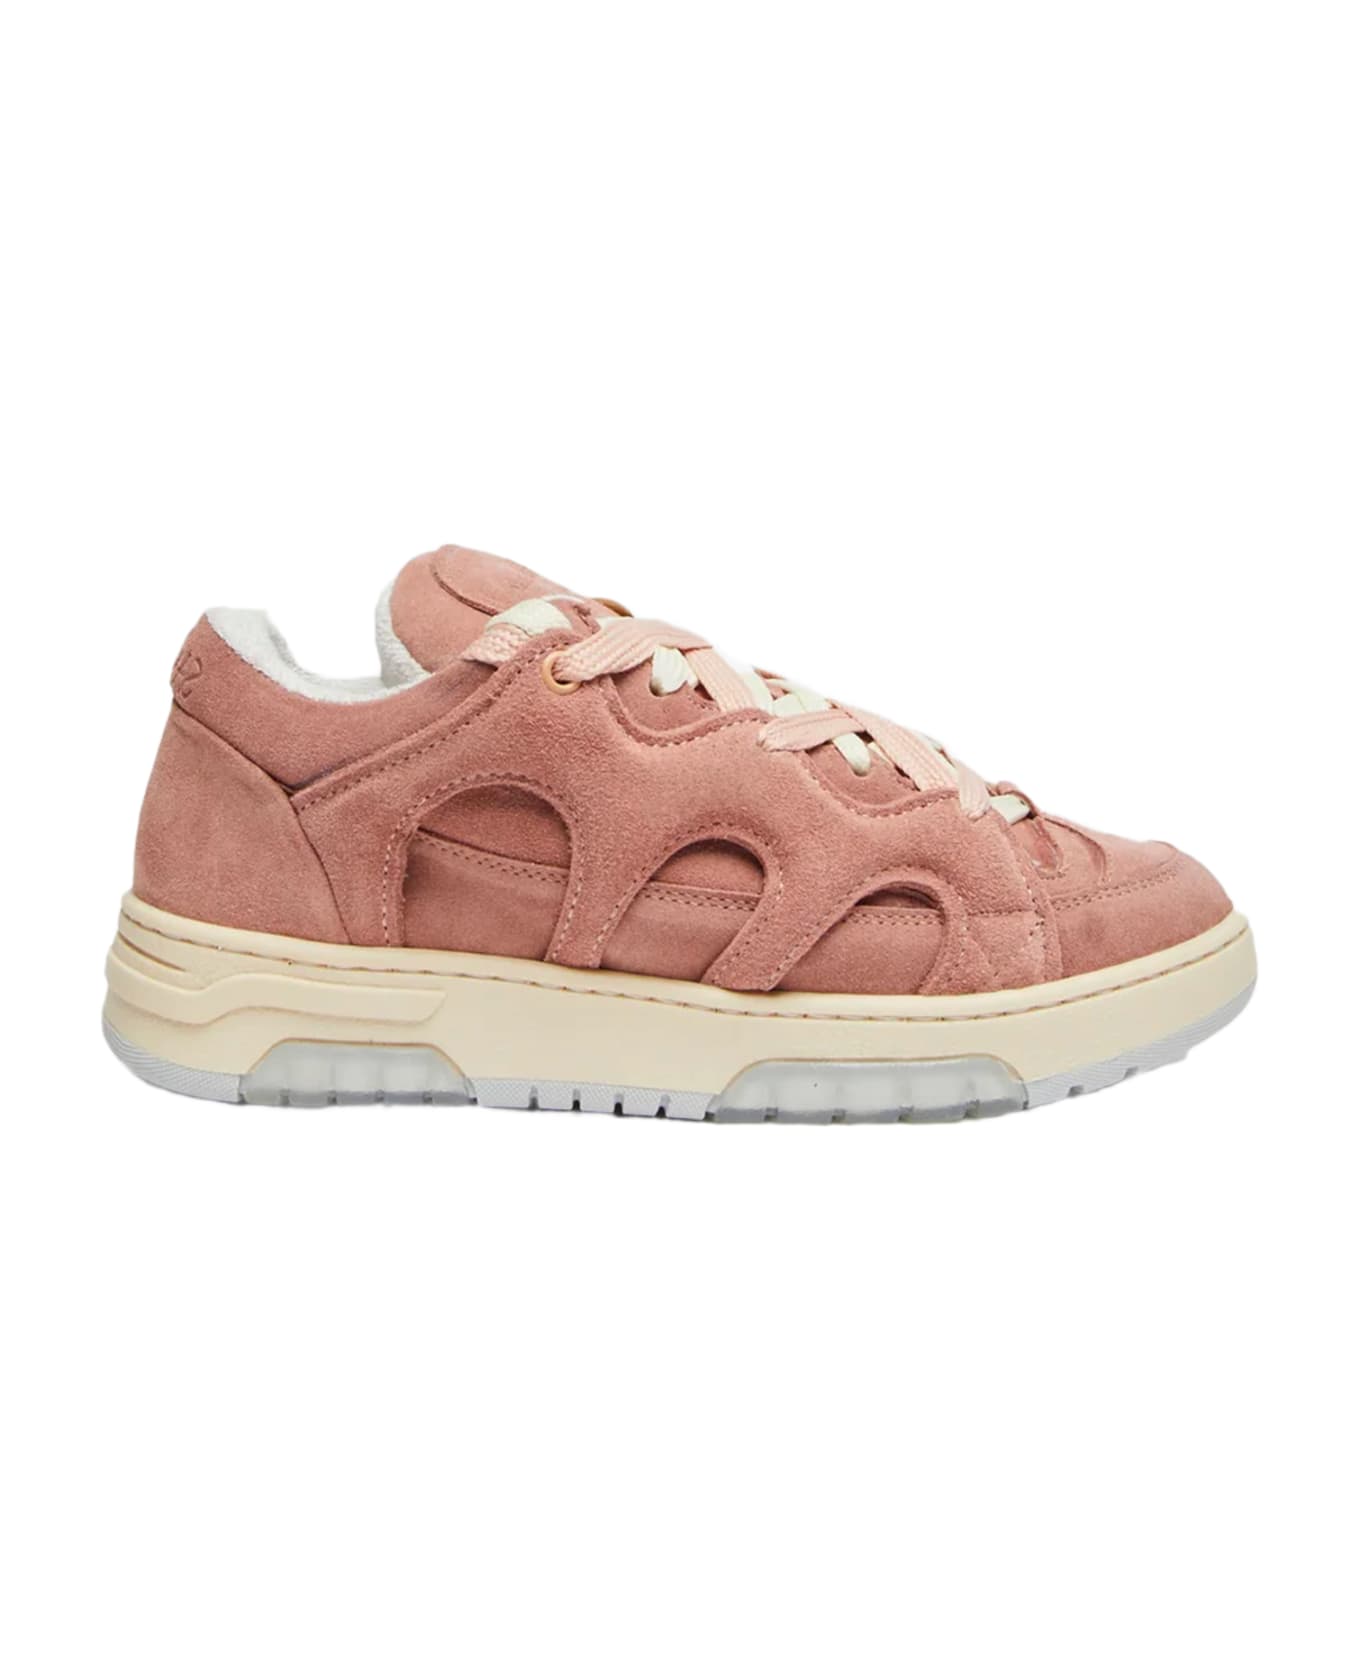 Paura Santha 1 Suede Antique Pink Suede Low Sneaker - Rosa